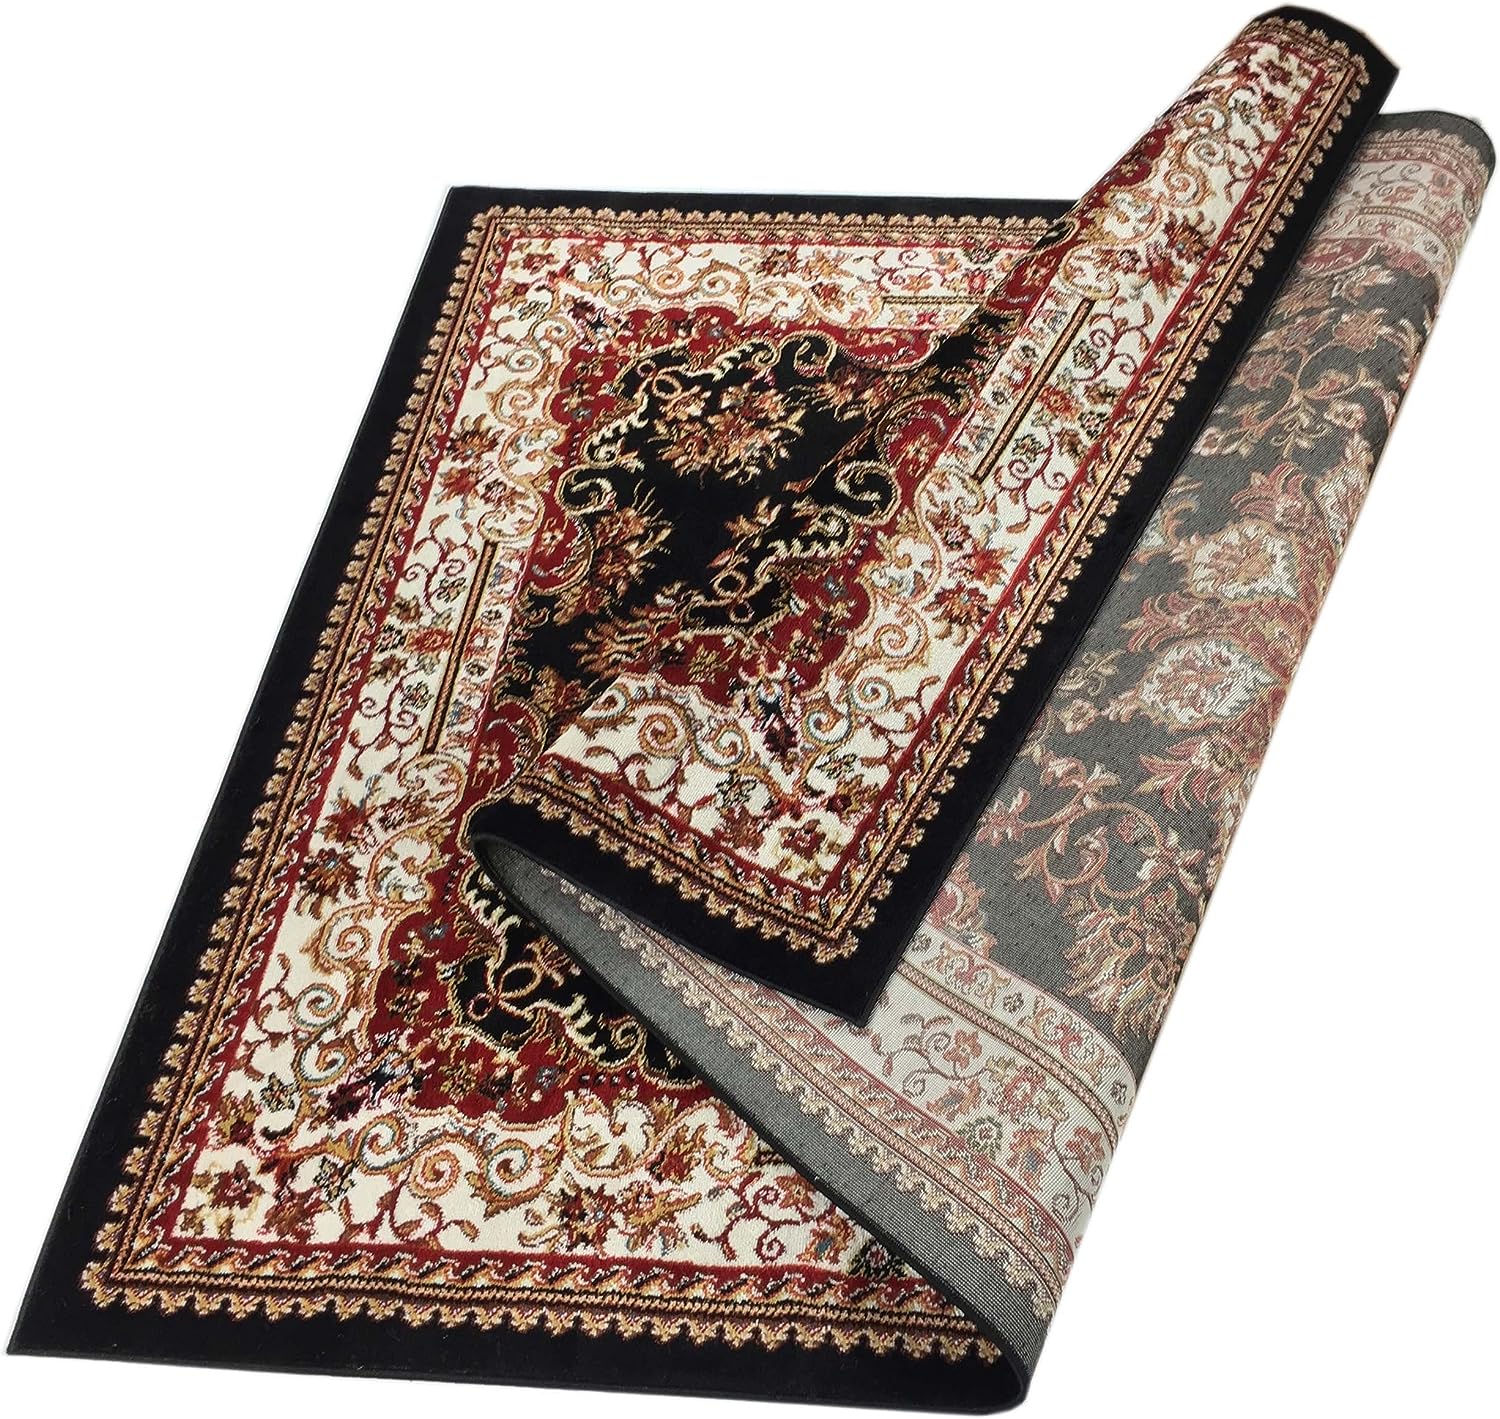 Nevita Collection Isfahan Persian Traditional Design Area Rug  (Black, 5' 3" x 7' 1")-4